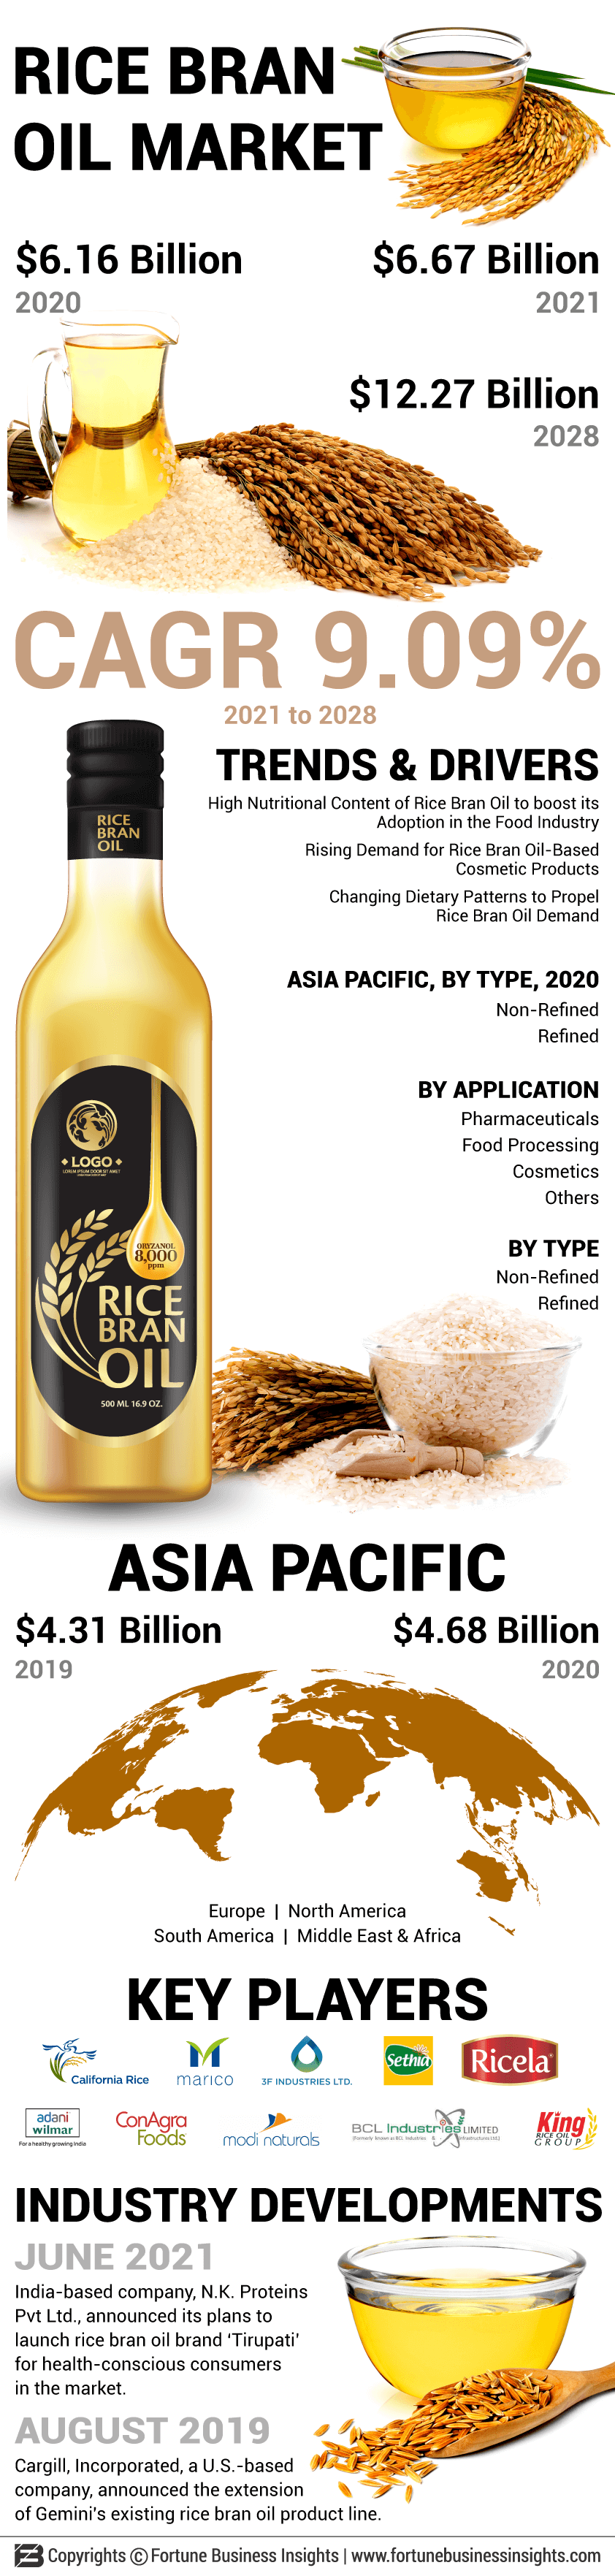 Rice Bran Oil Market